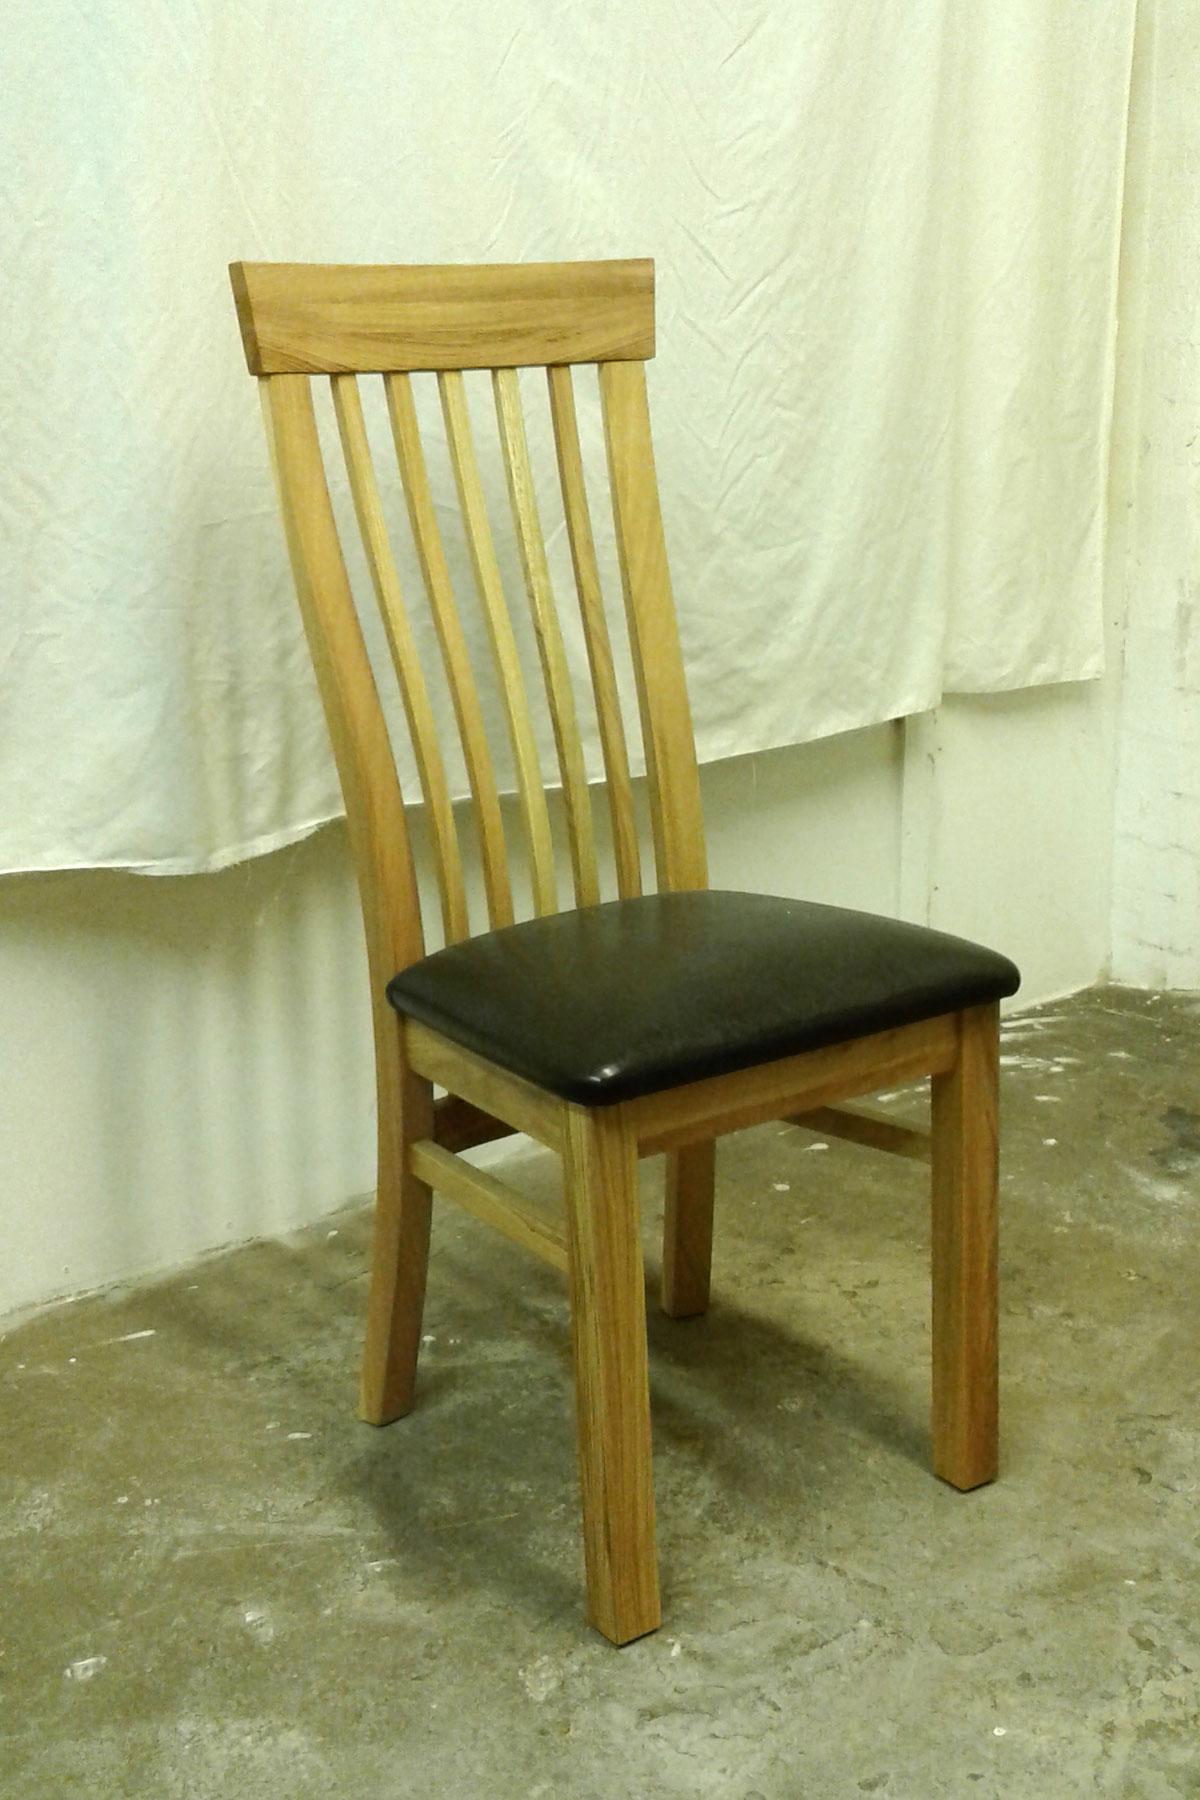 Oak chairs for sale in North Devon